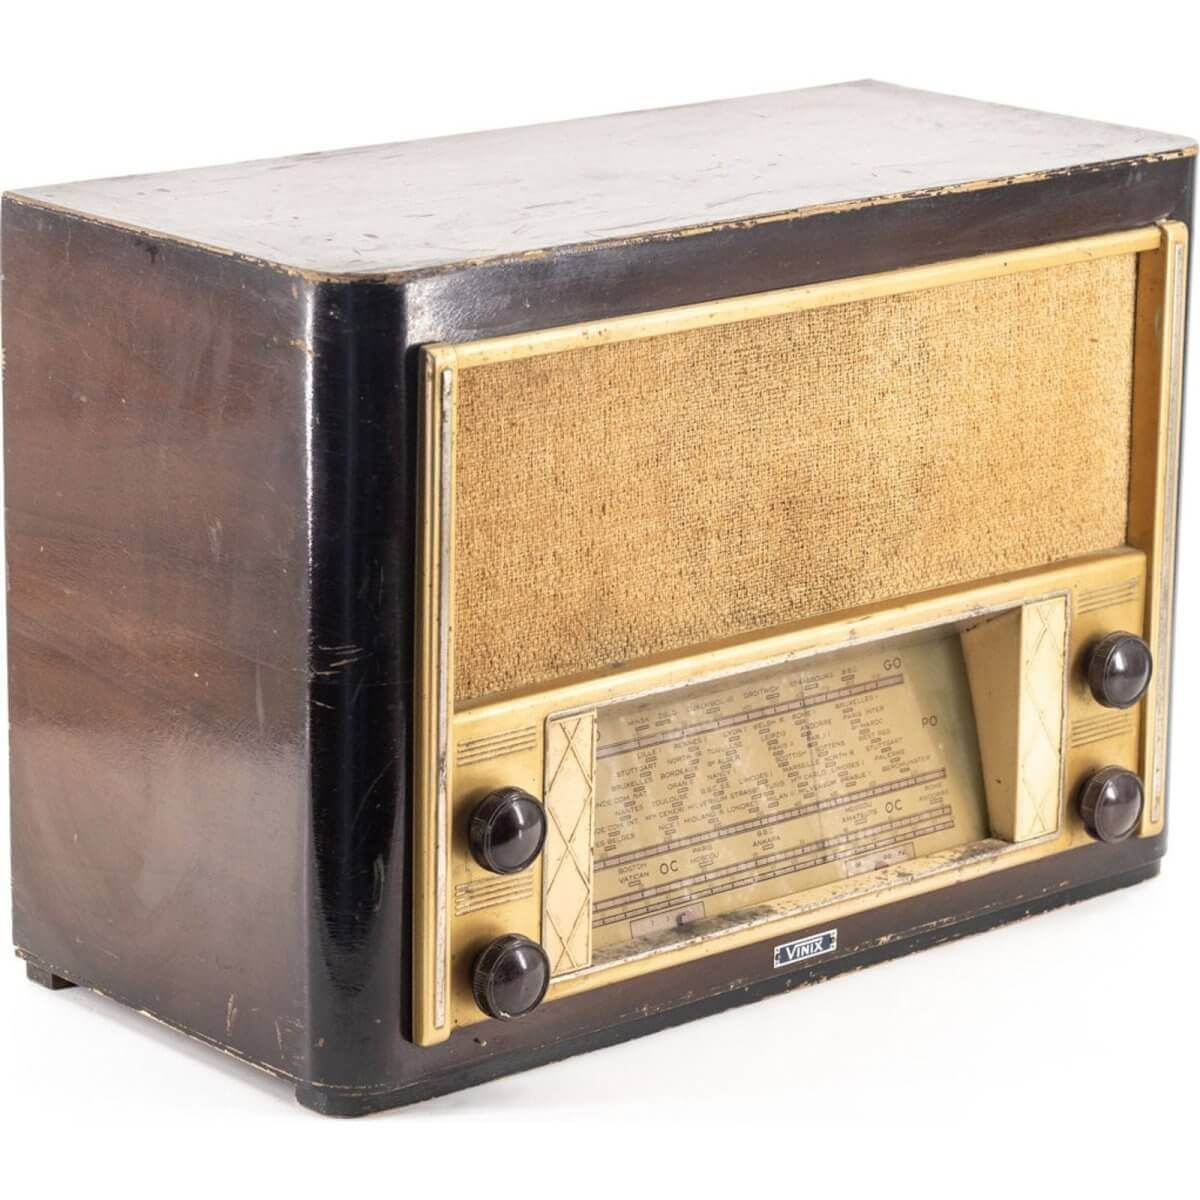 Radio Bluetooth Vinix Vintage 50’S enceinte connectée bluetooth haut de gamme prodige radio vintage design